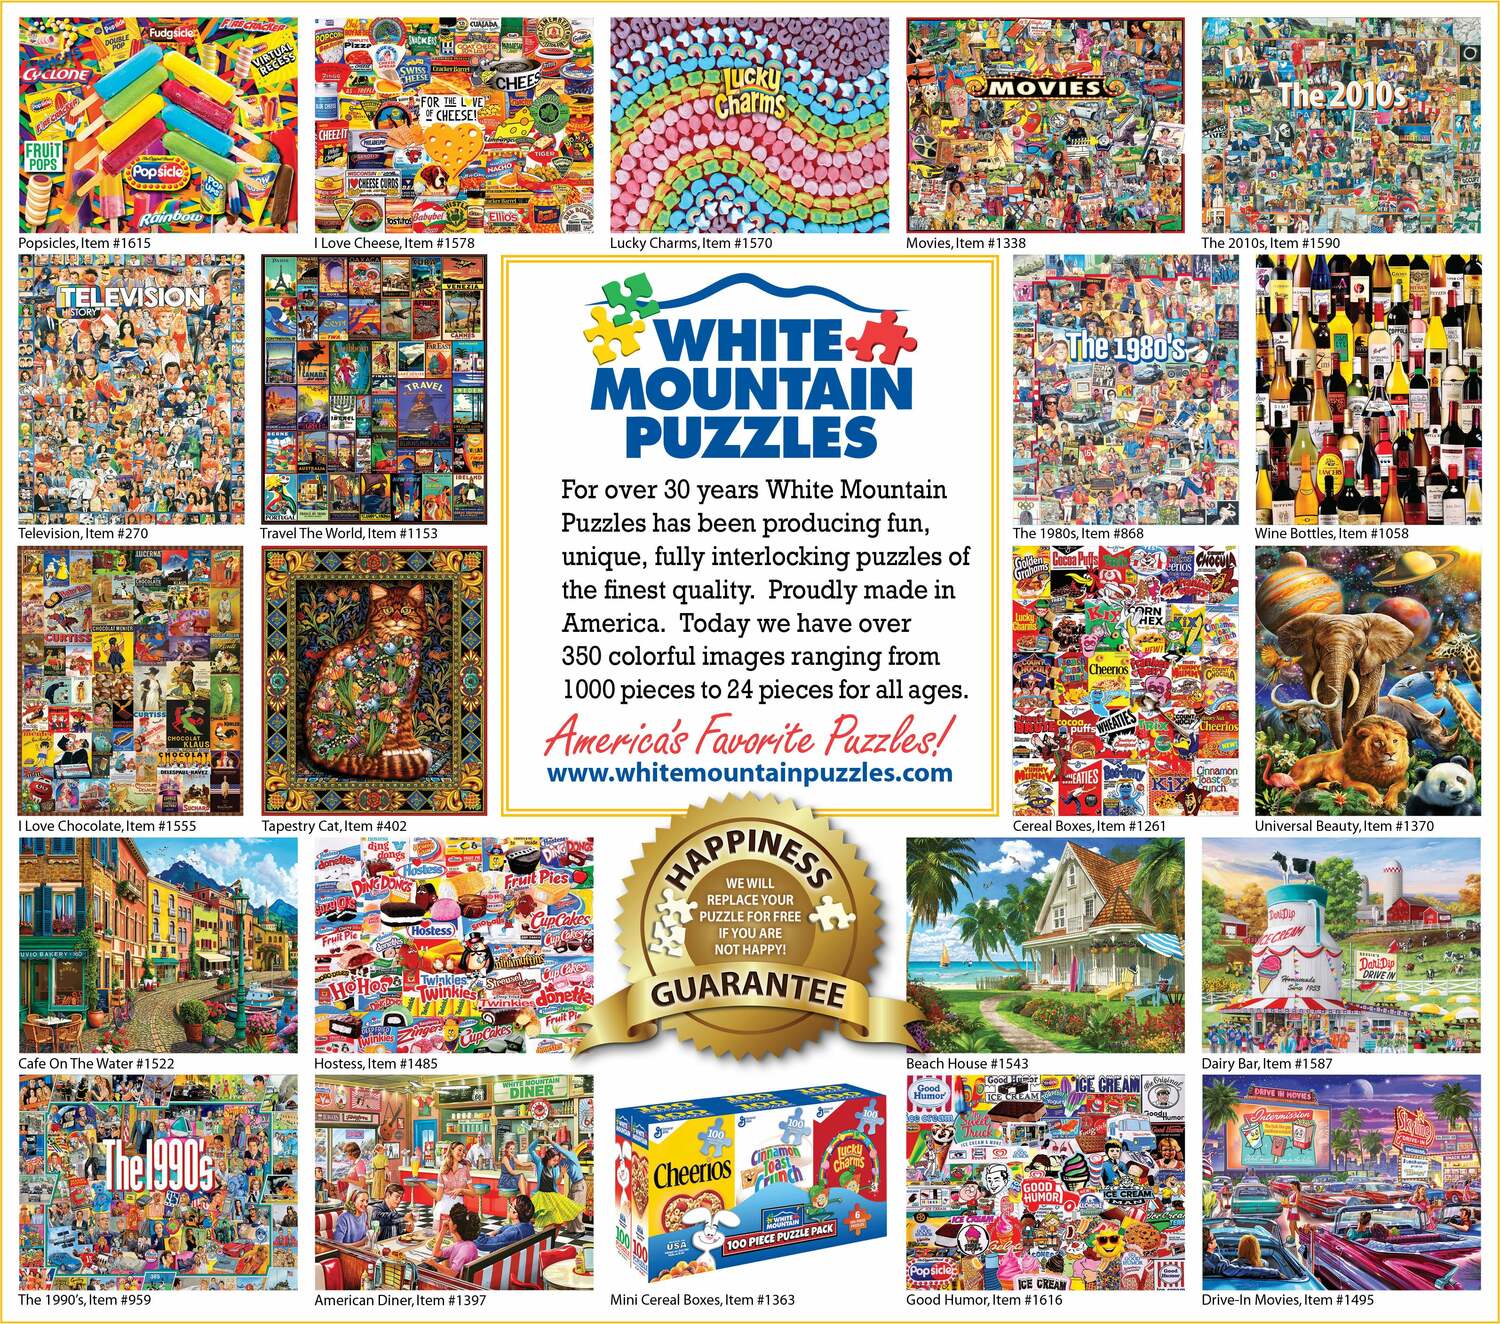 Seaside Village - 500 Piece Jigsaw Puzzle